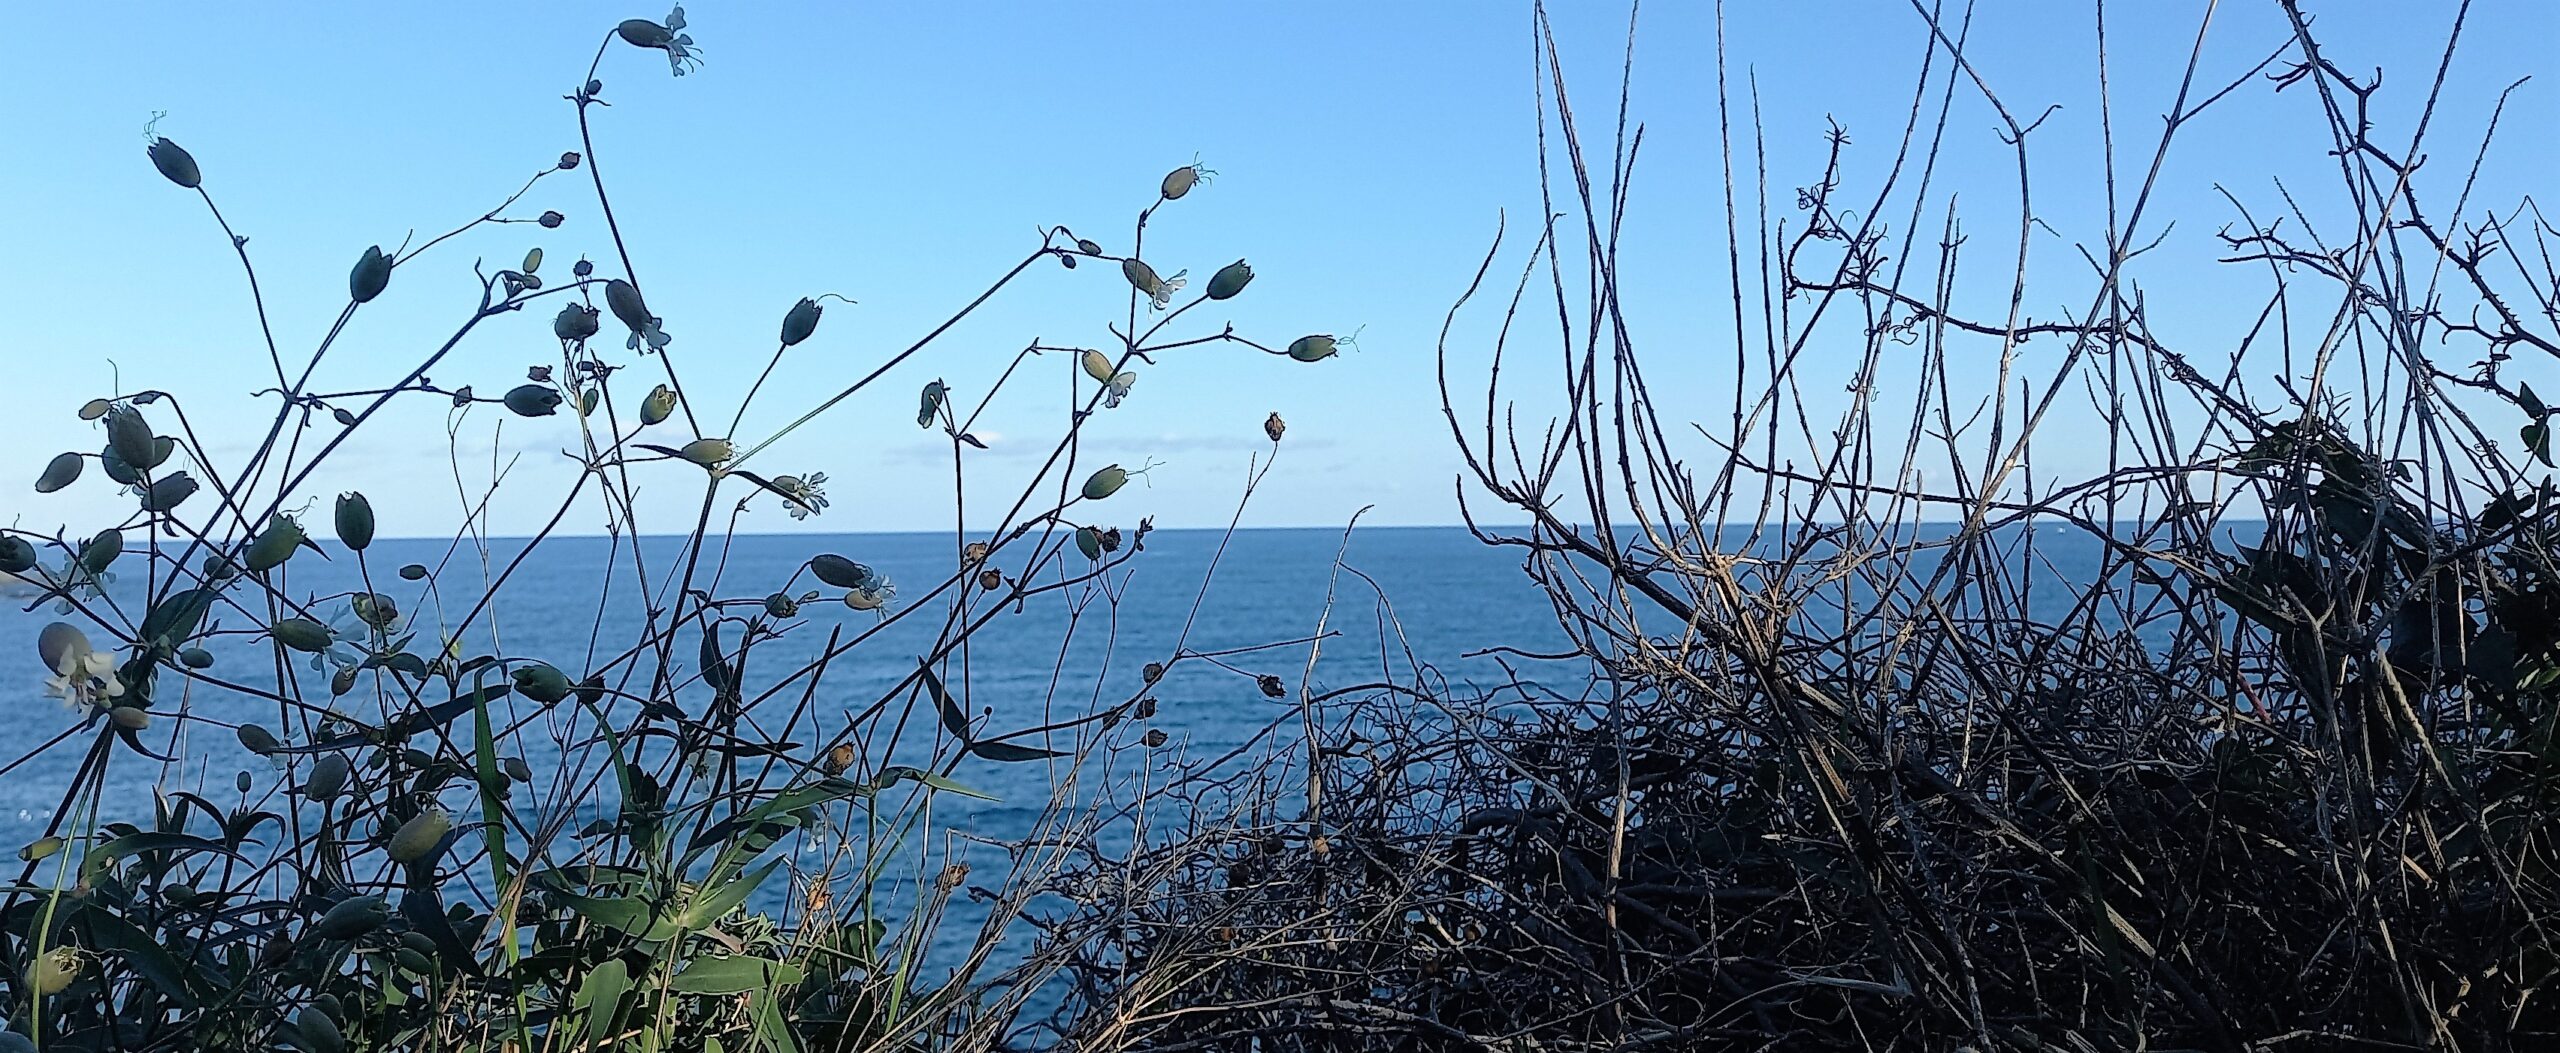 vibrant world mediterranean island sicily needs love 1mqdb imprints of peace